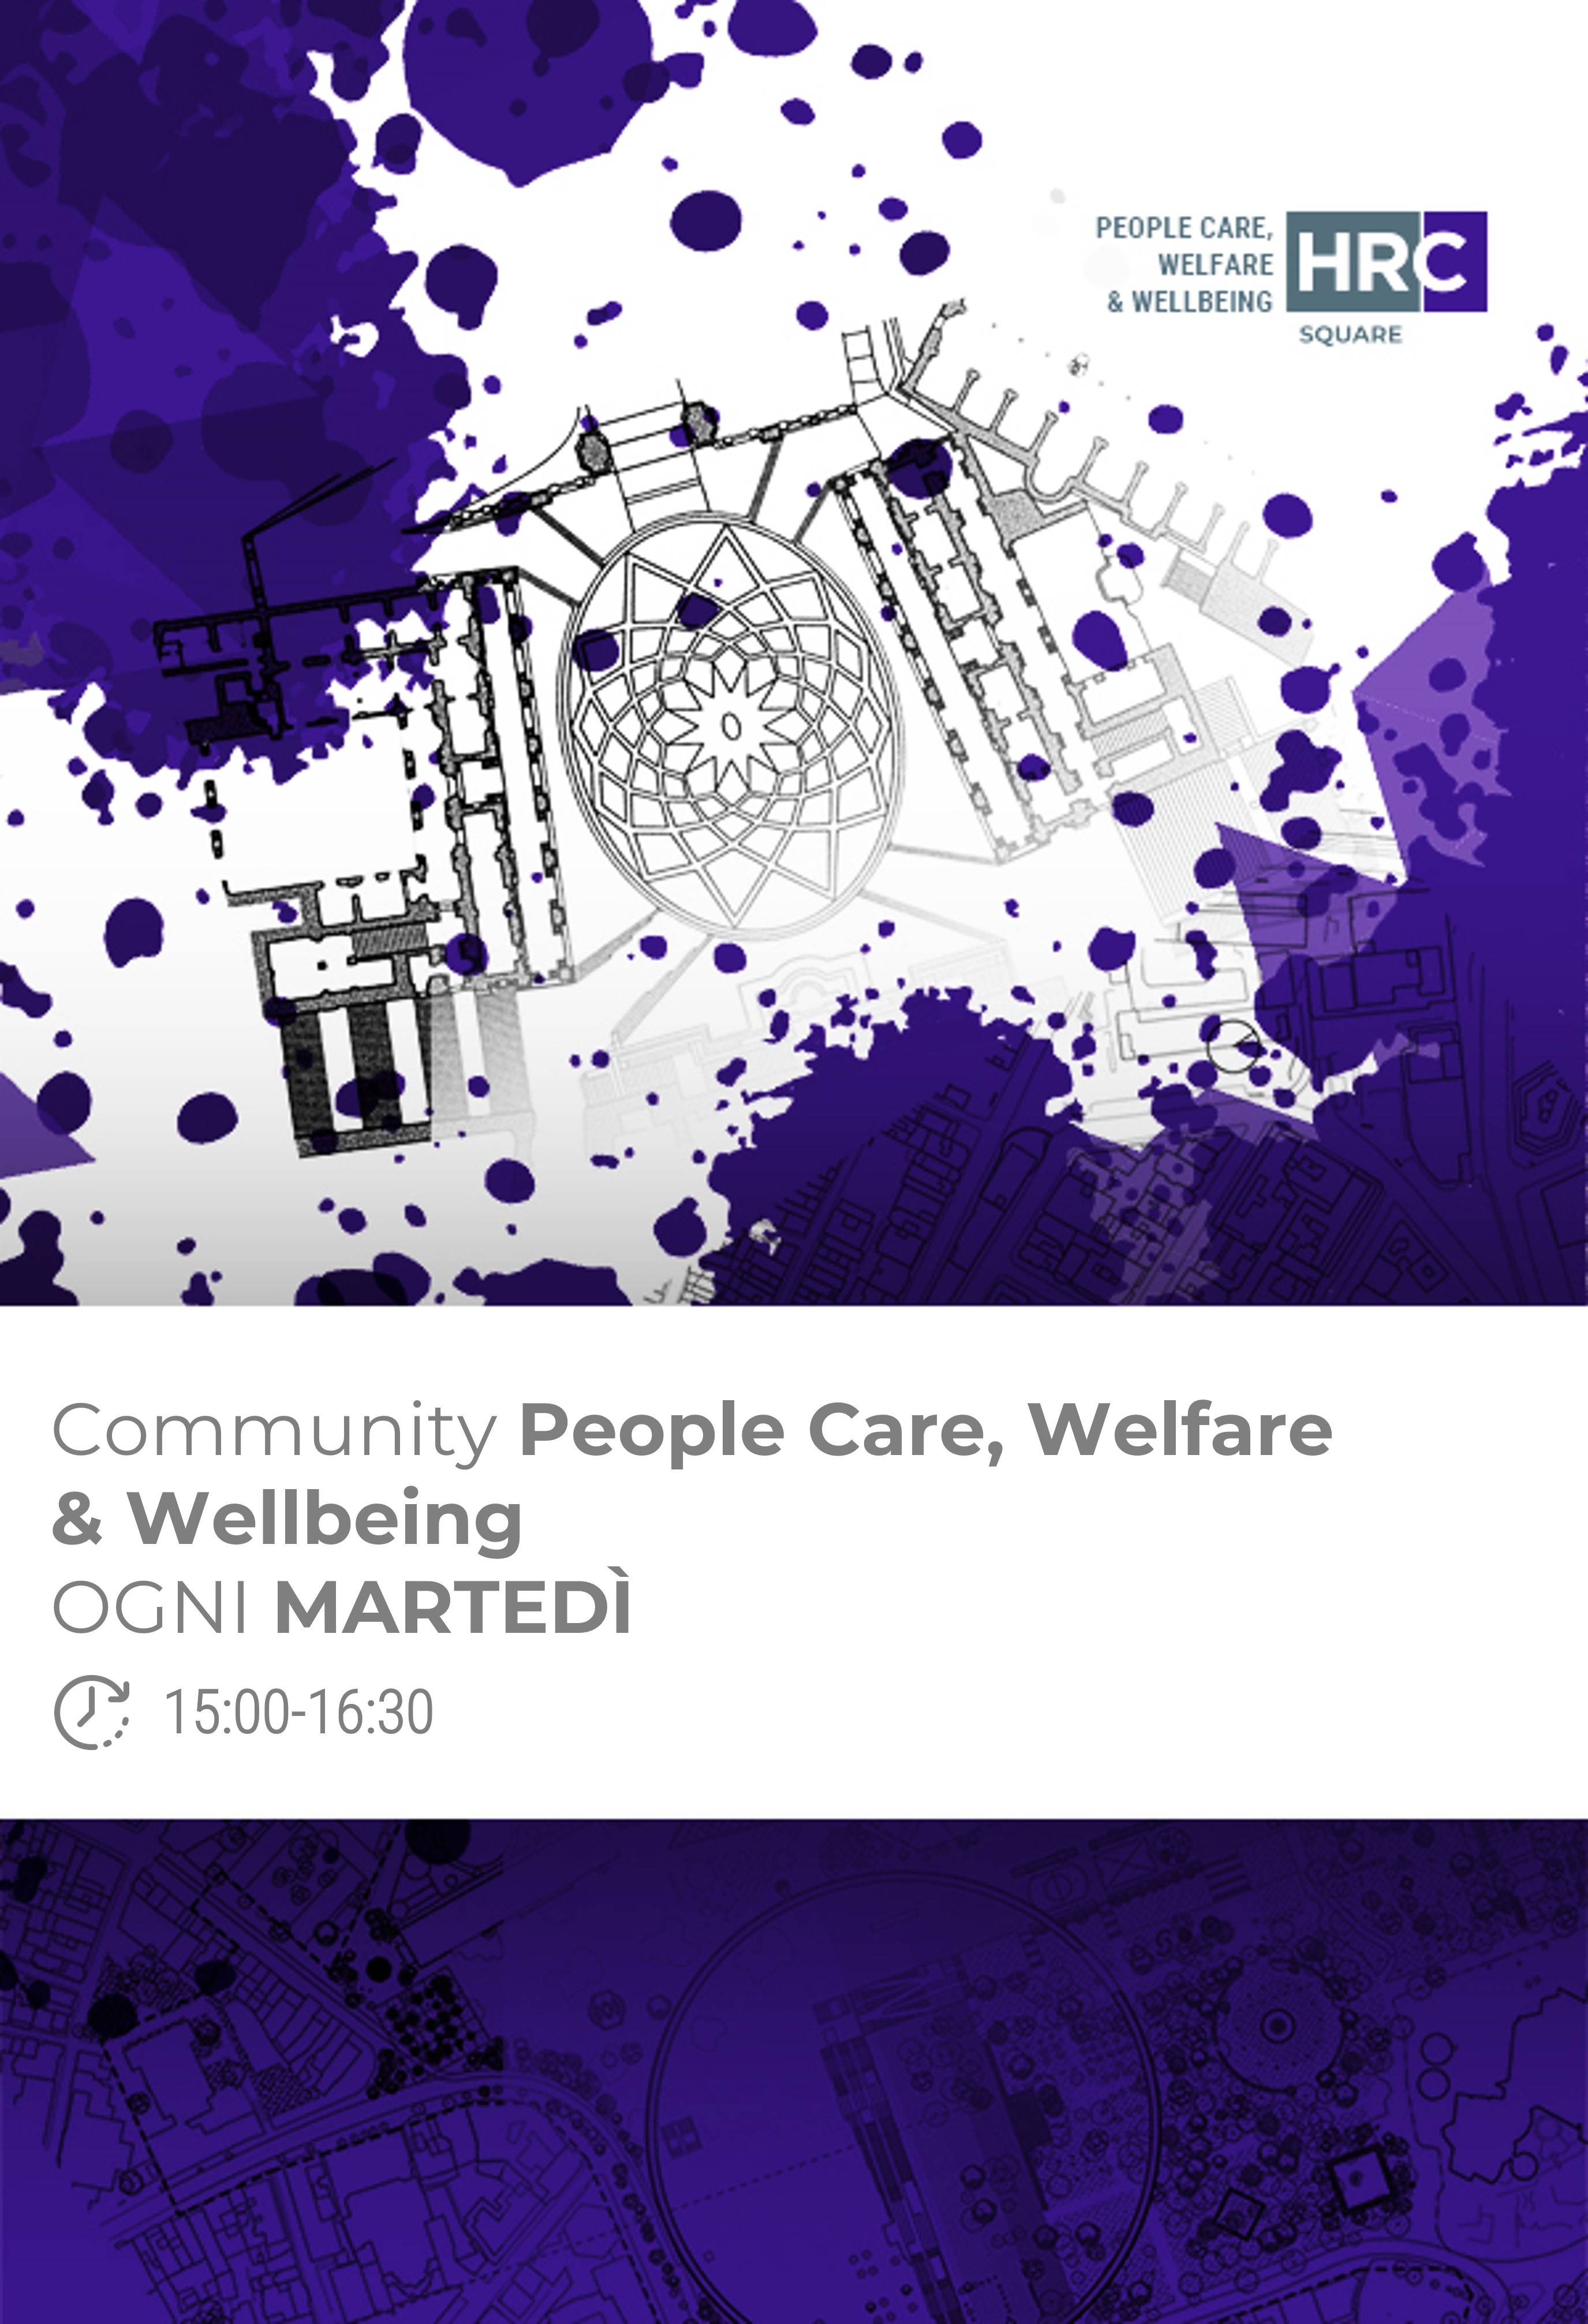 People care, welfare e wellbeing